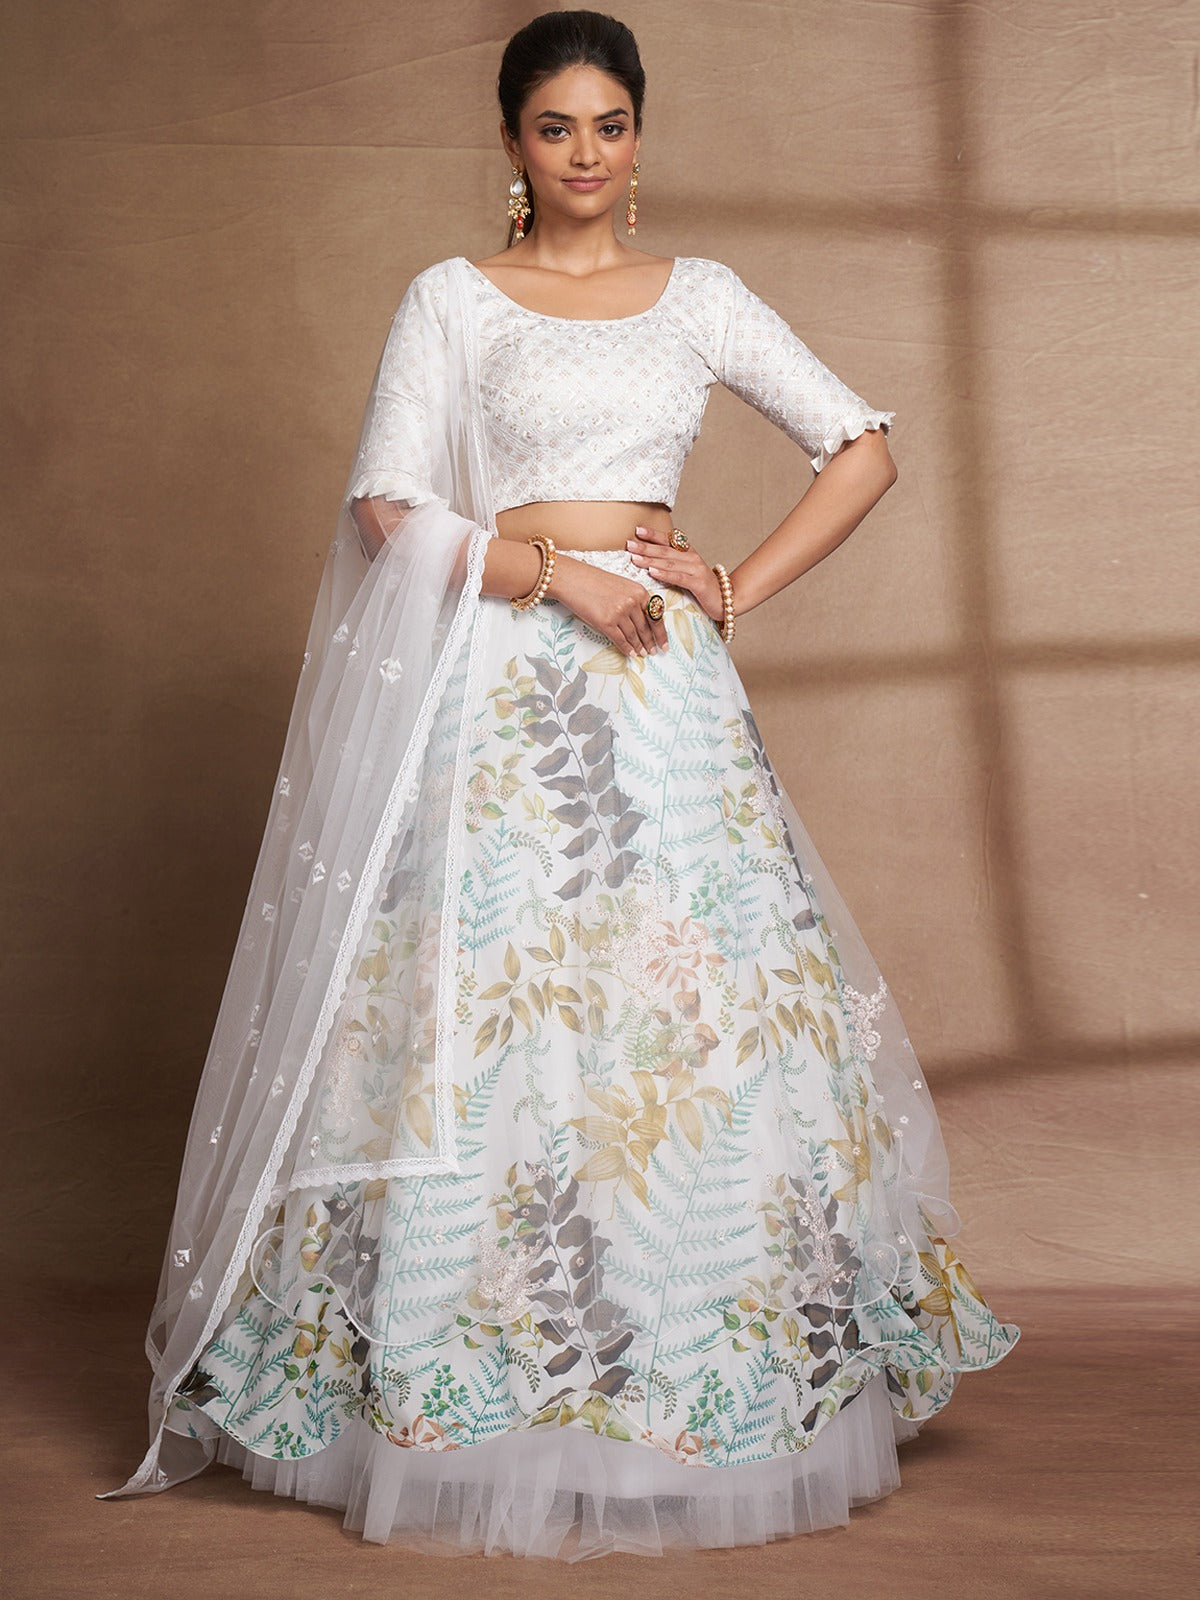 Buy More You Lehenga for Women | Wedding Dress for Women | Haldi Dress for  Women | Ghagra Choli for Women | Yellow Lehenga for Haldi Ceremony at  Amazon.in